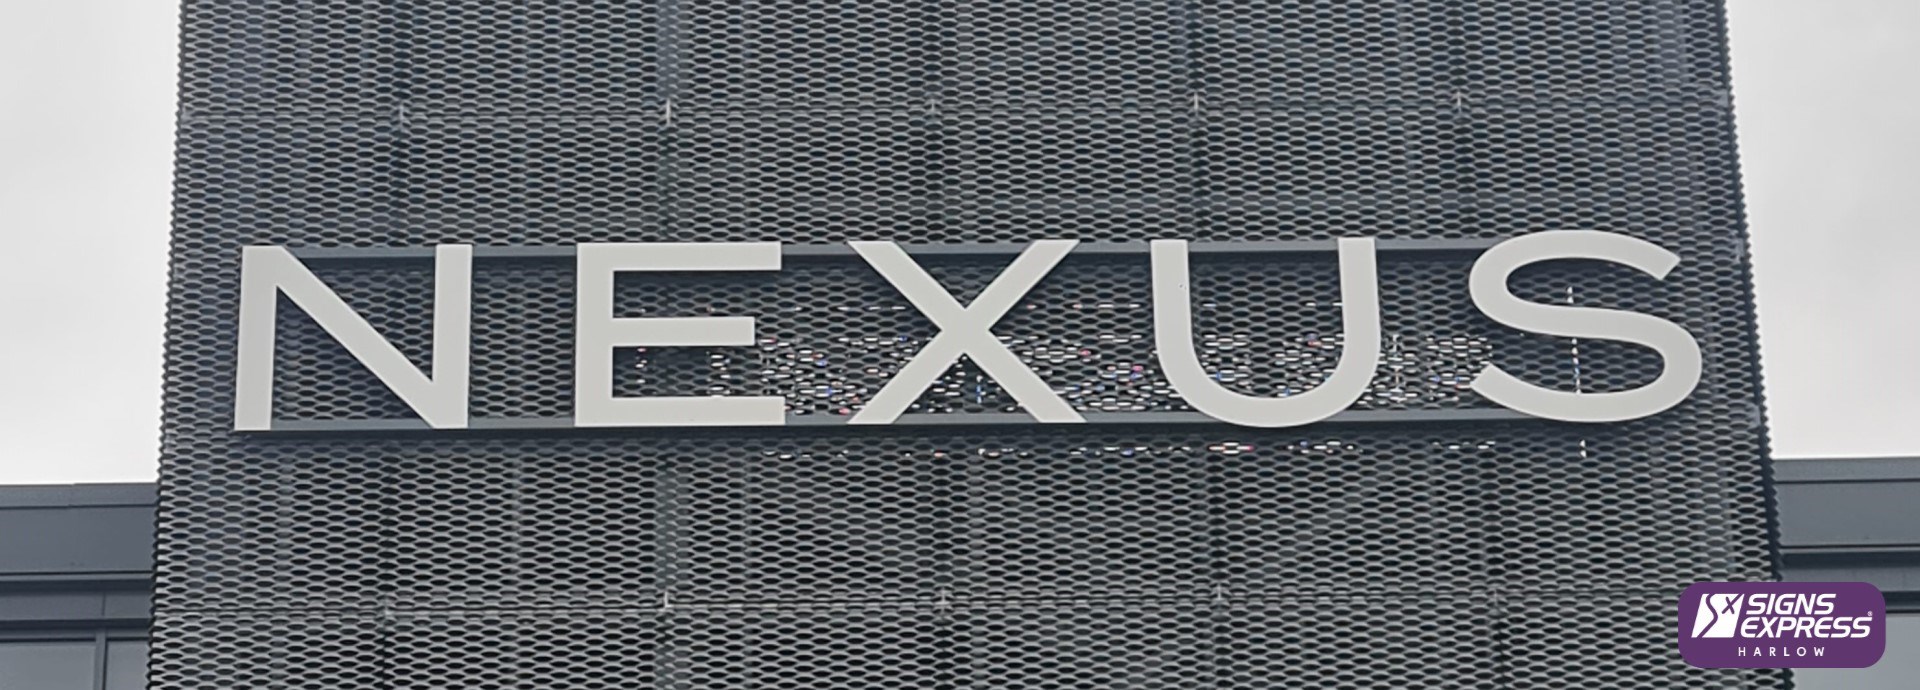 Nexus Main Sign By Signs Express Harlow